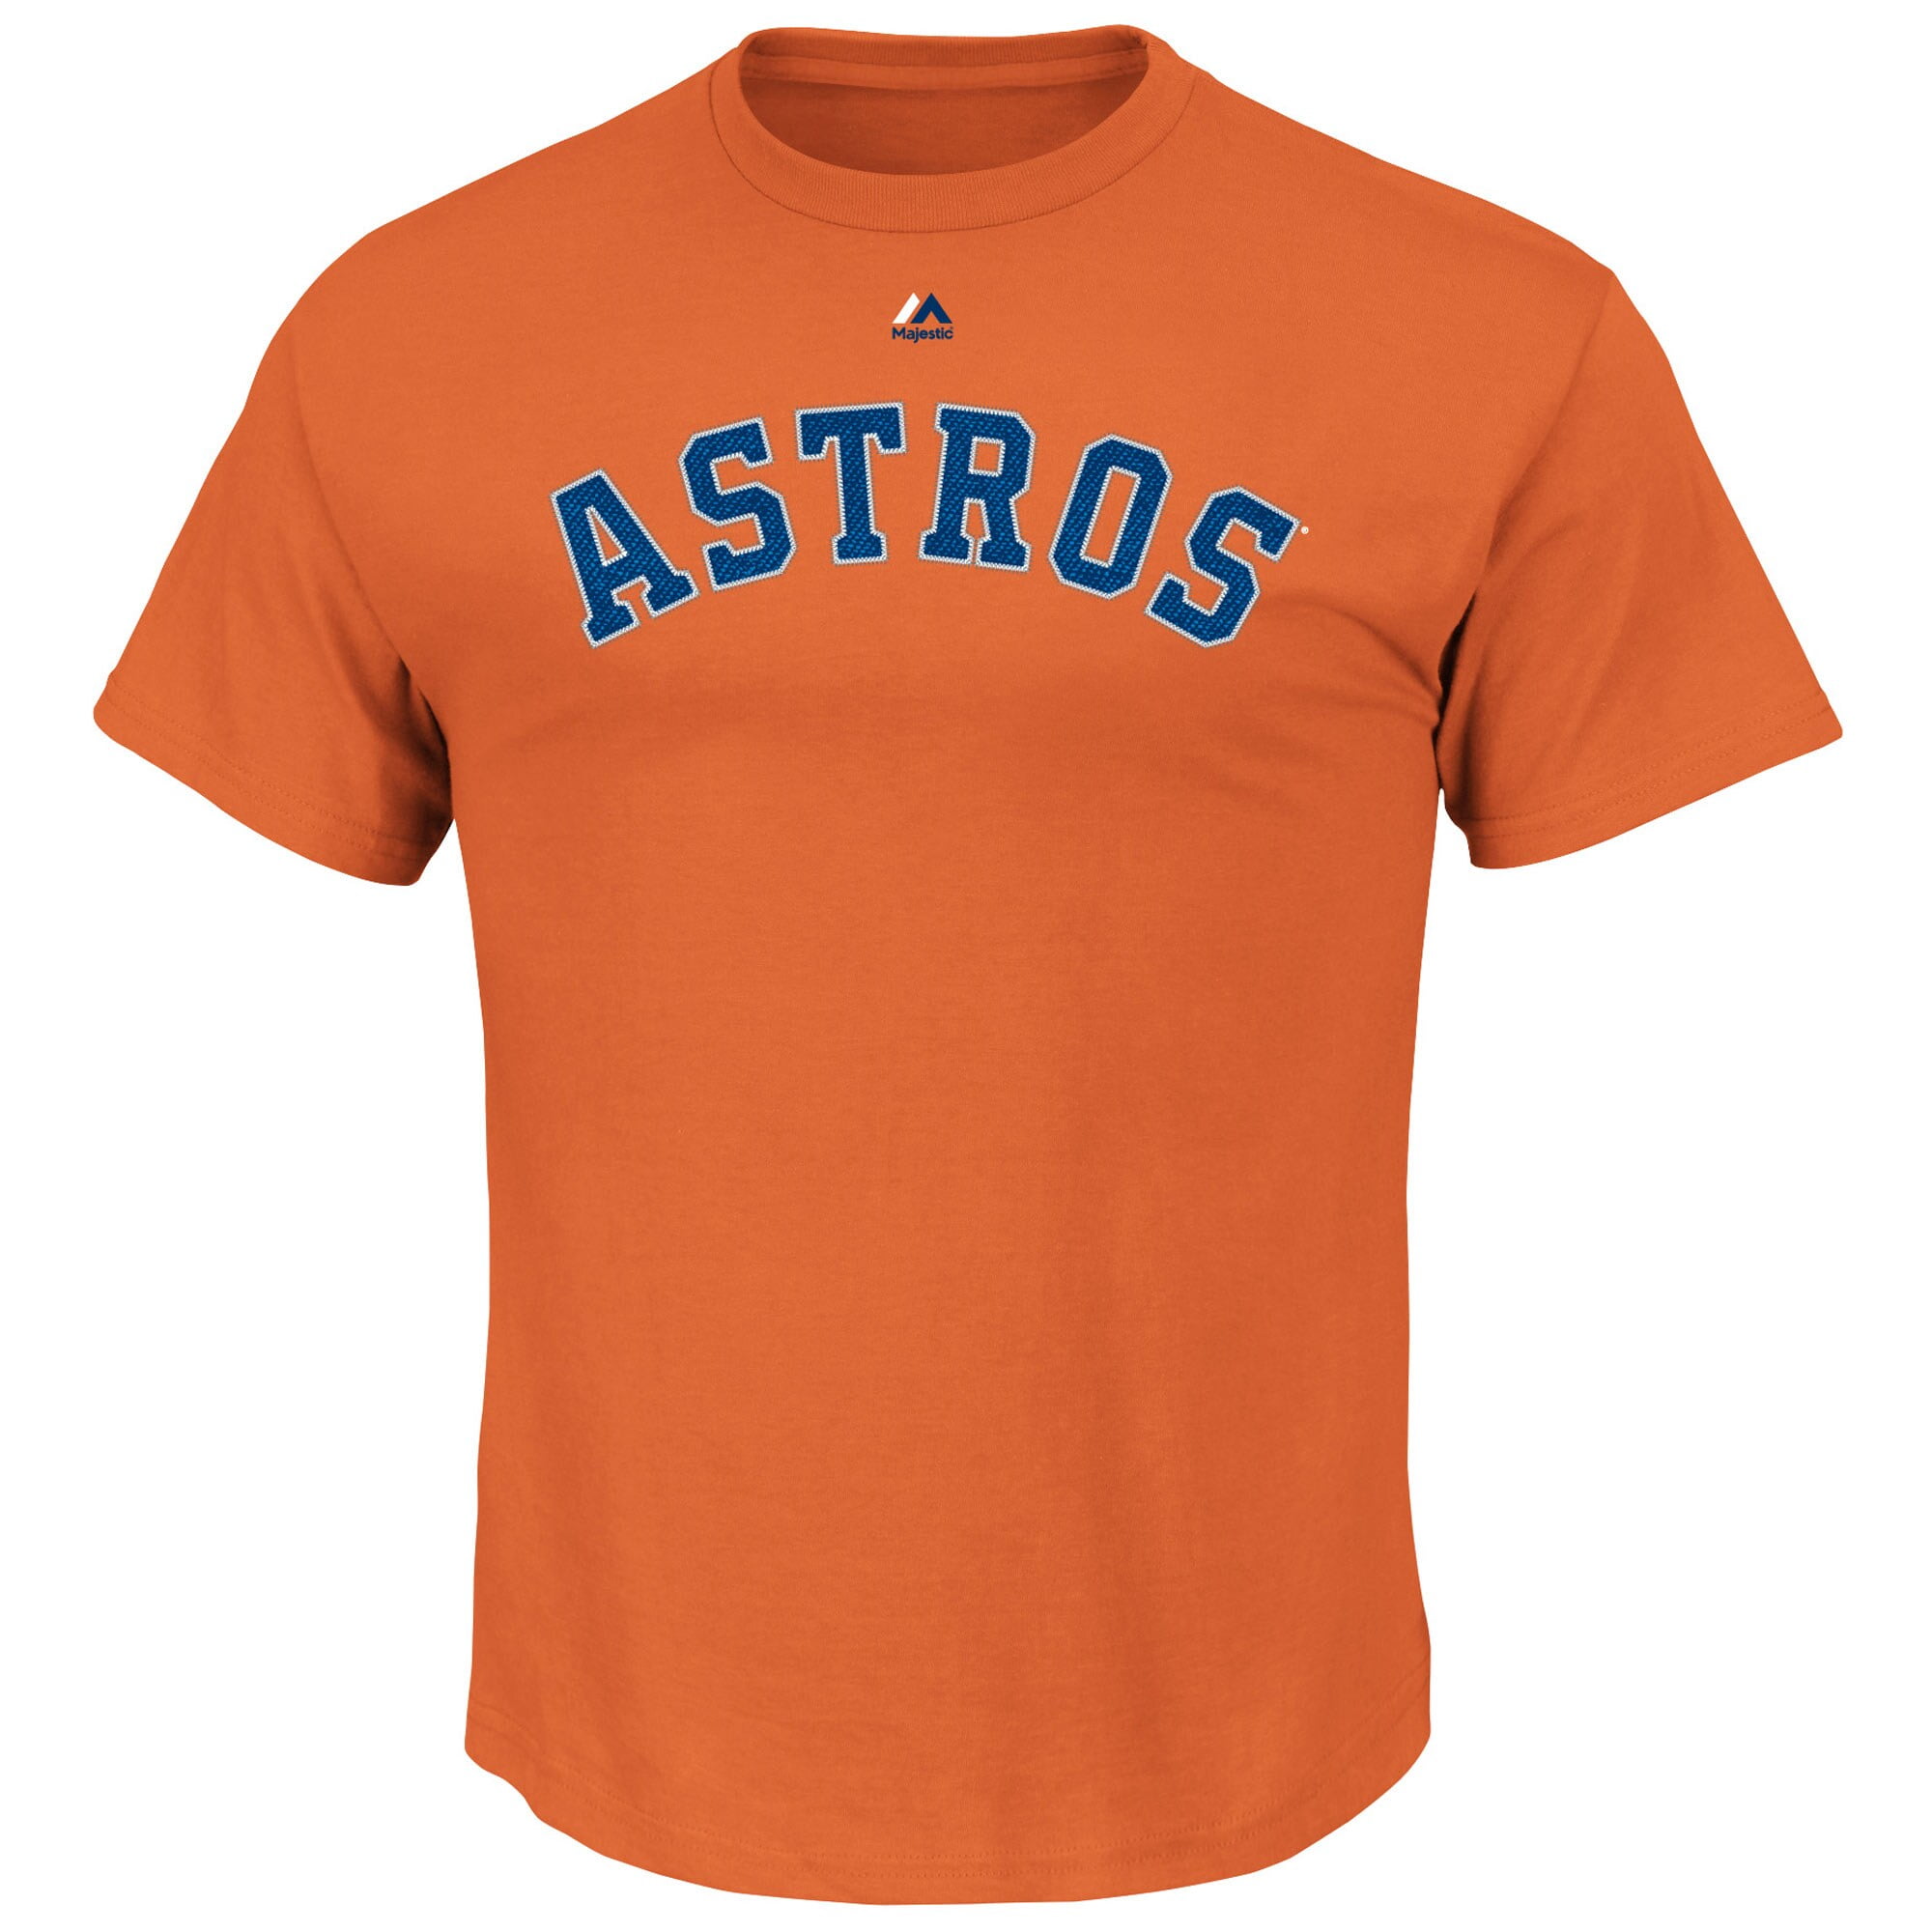 astros fishing shirt